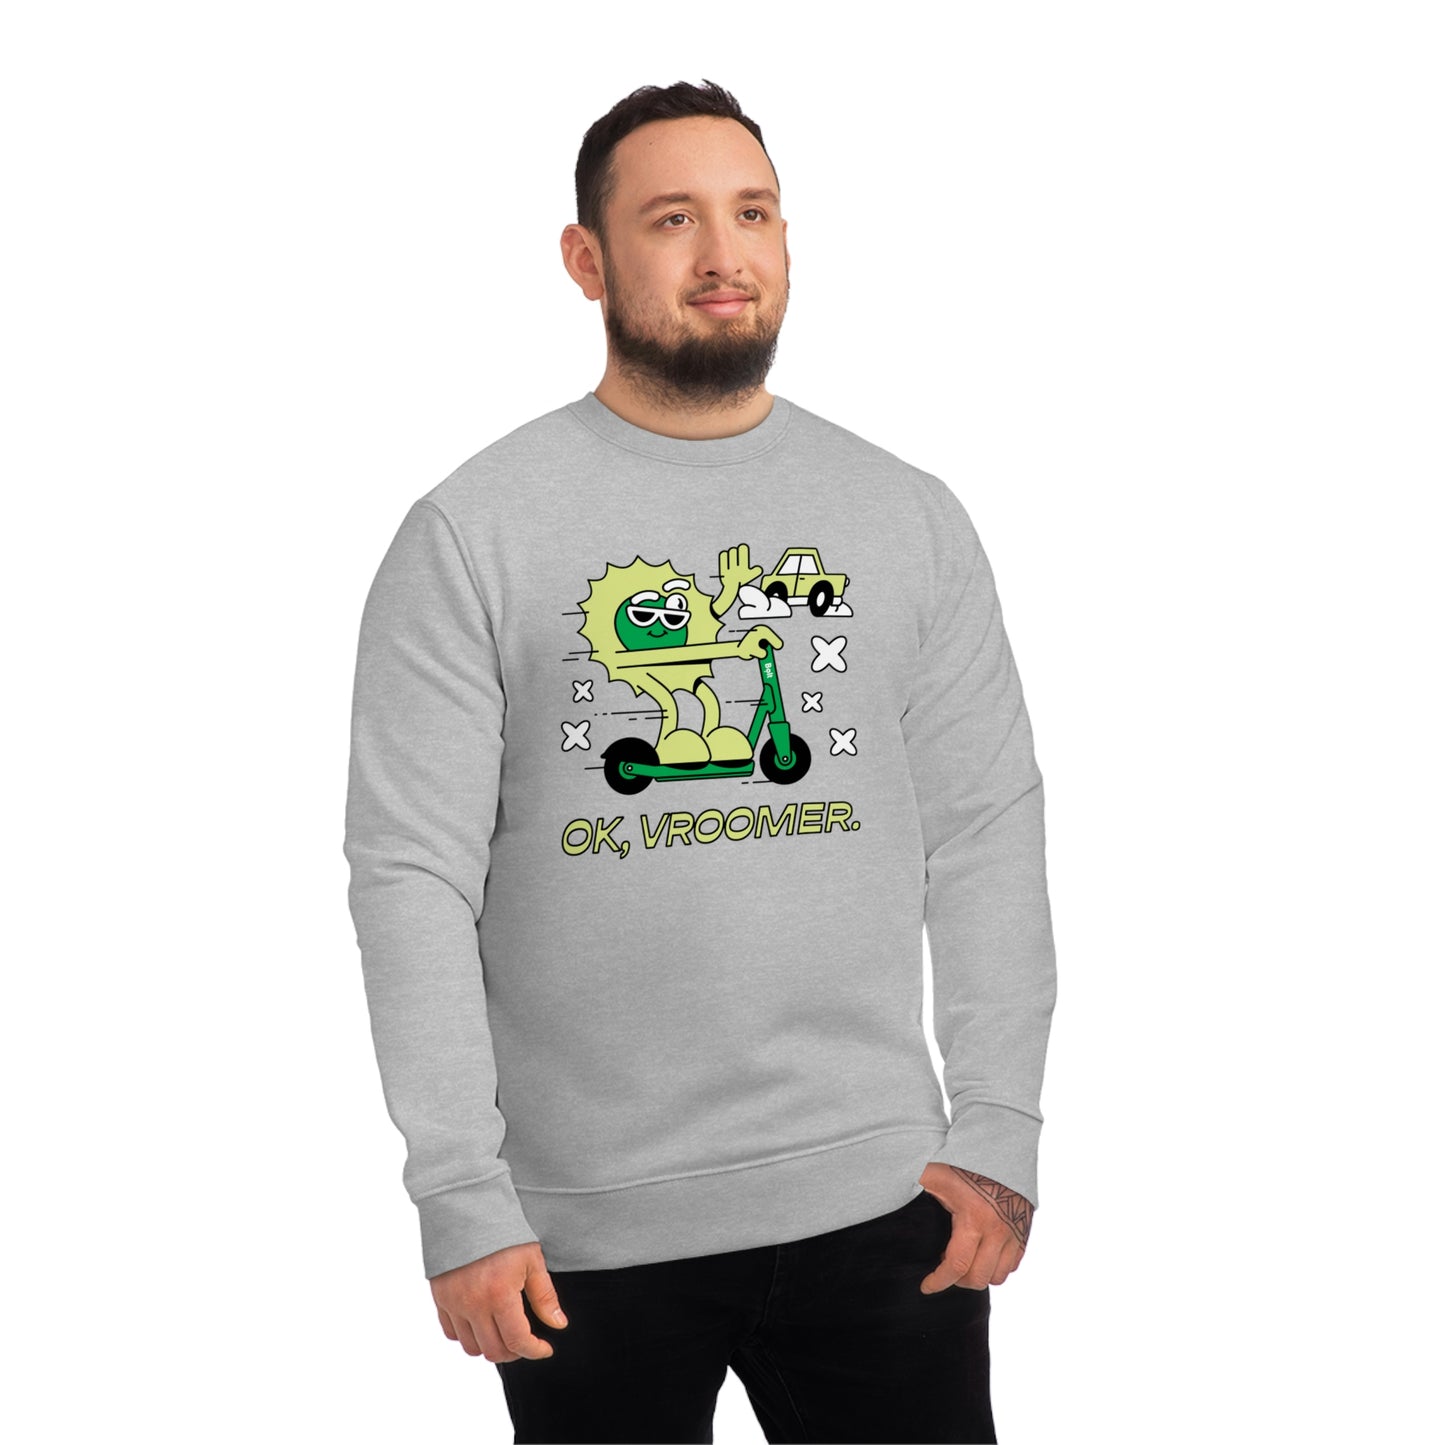 Bolt Spring Merch Unisex Sweatshirt - Ok vroomer!